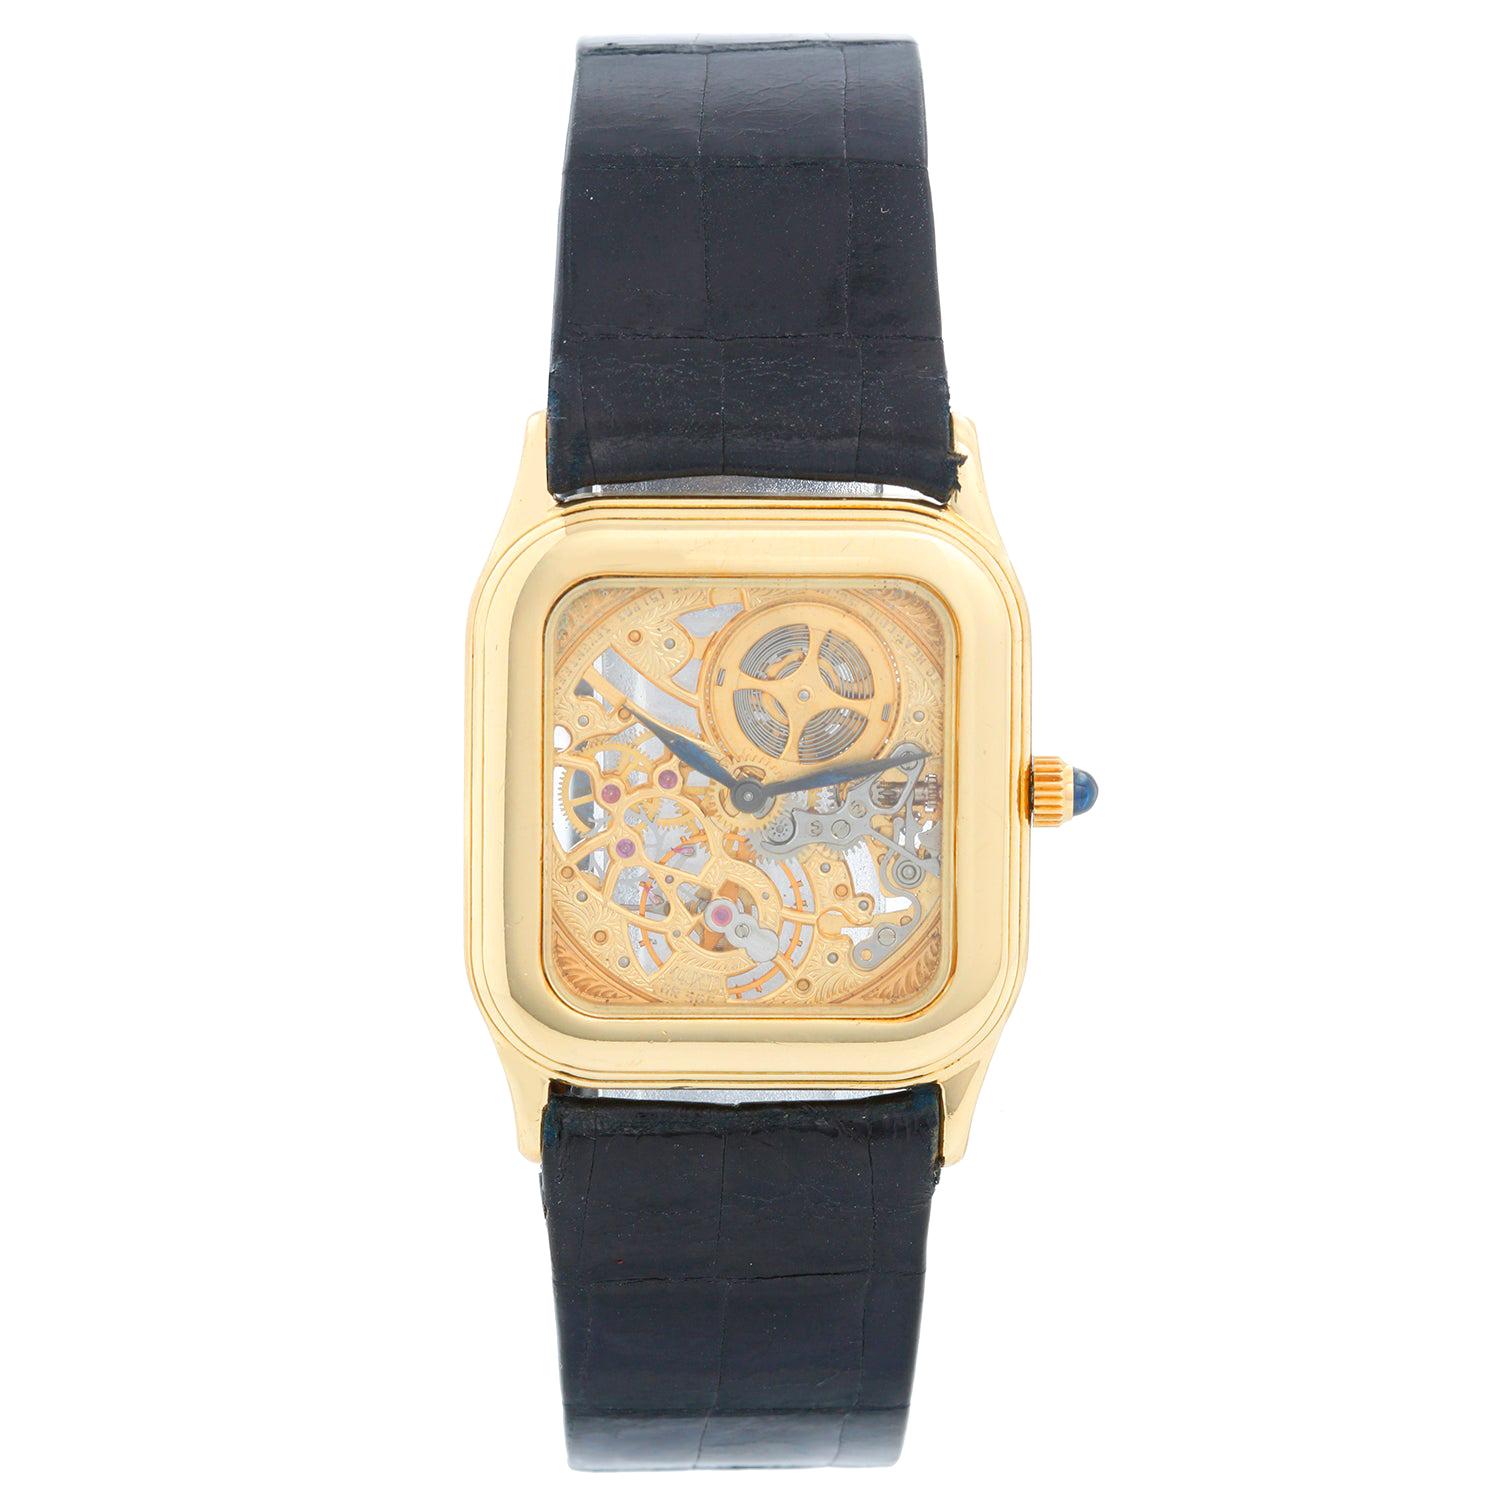 Very Rare Audemars Piguet 18 Karat Yellow Gold Openworked Watch Ref 4386